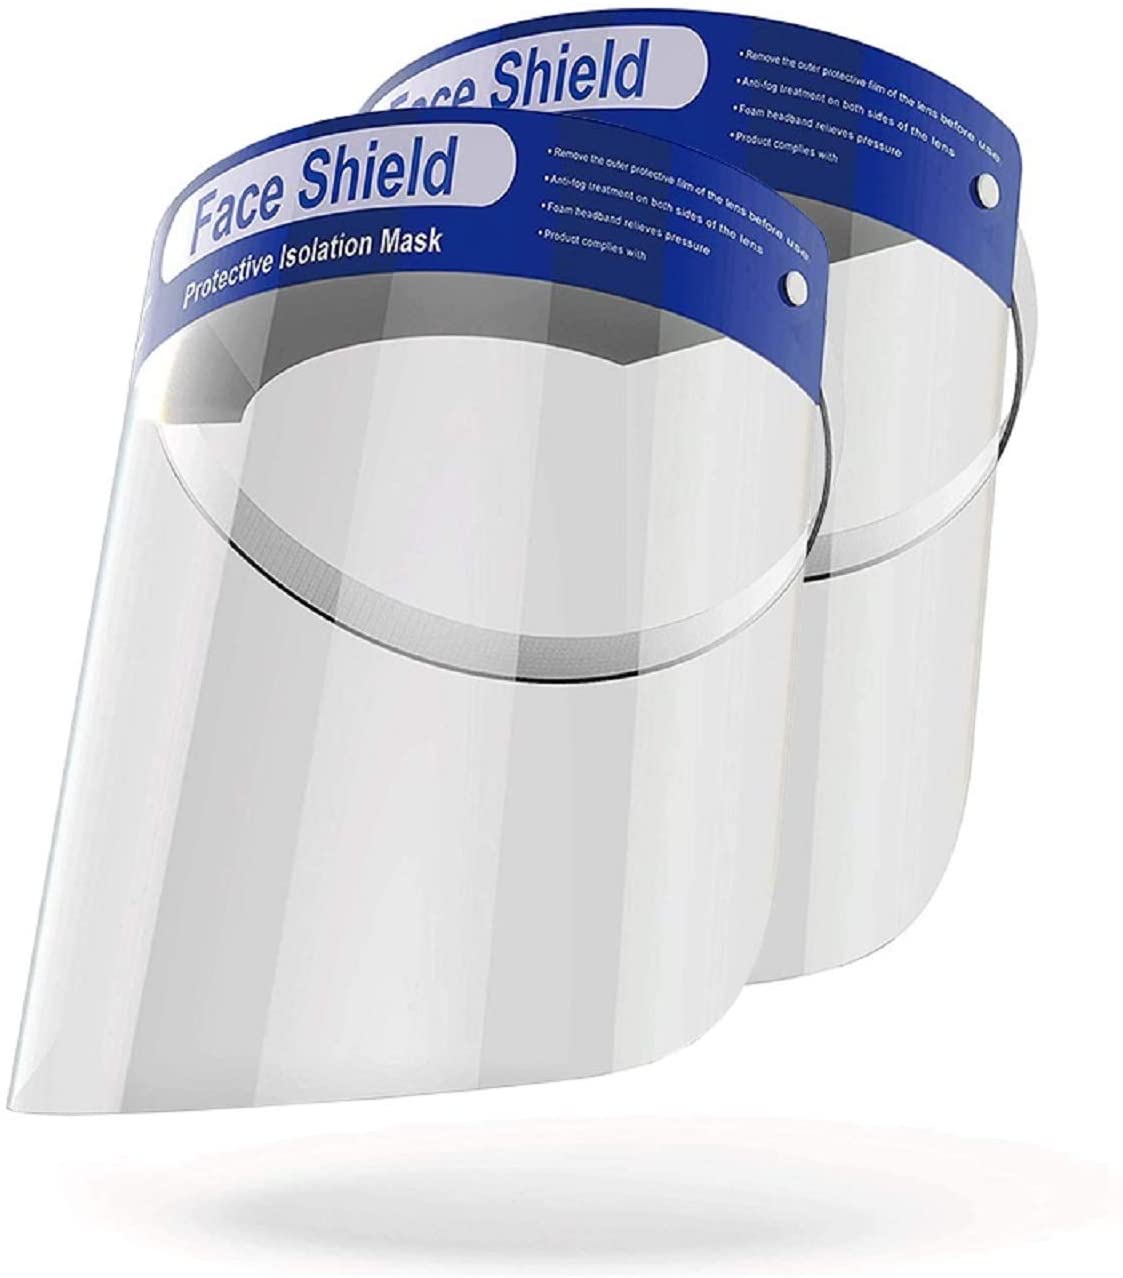 Reusable Face Shields (2-Pack)